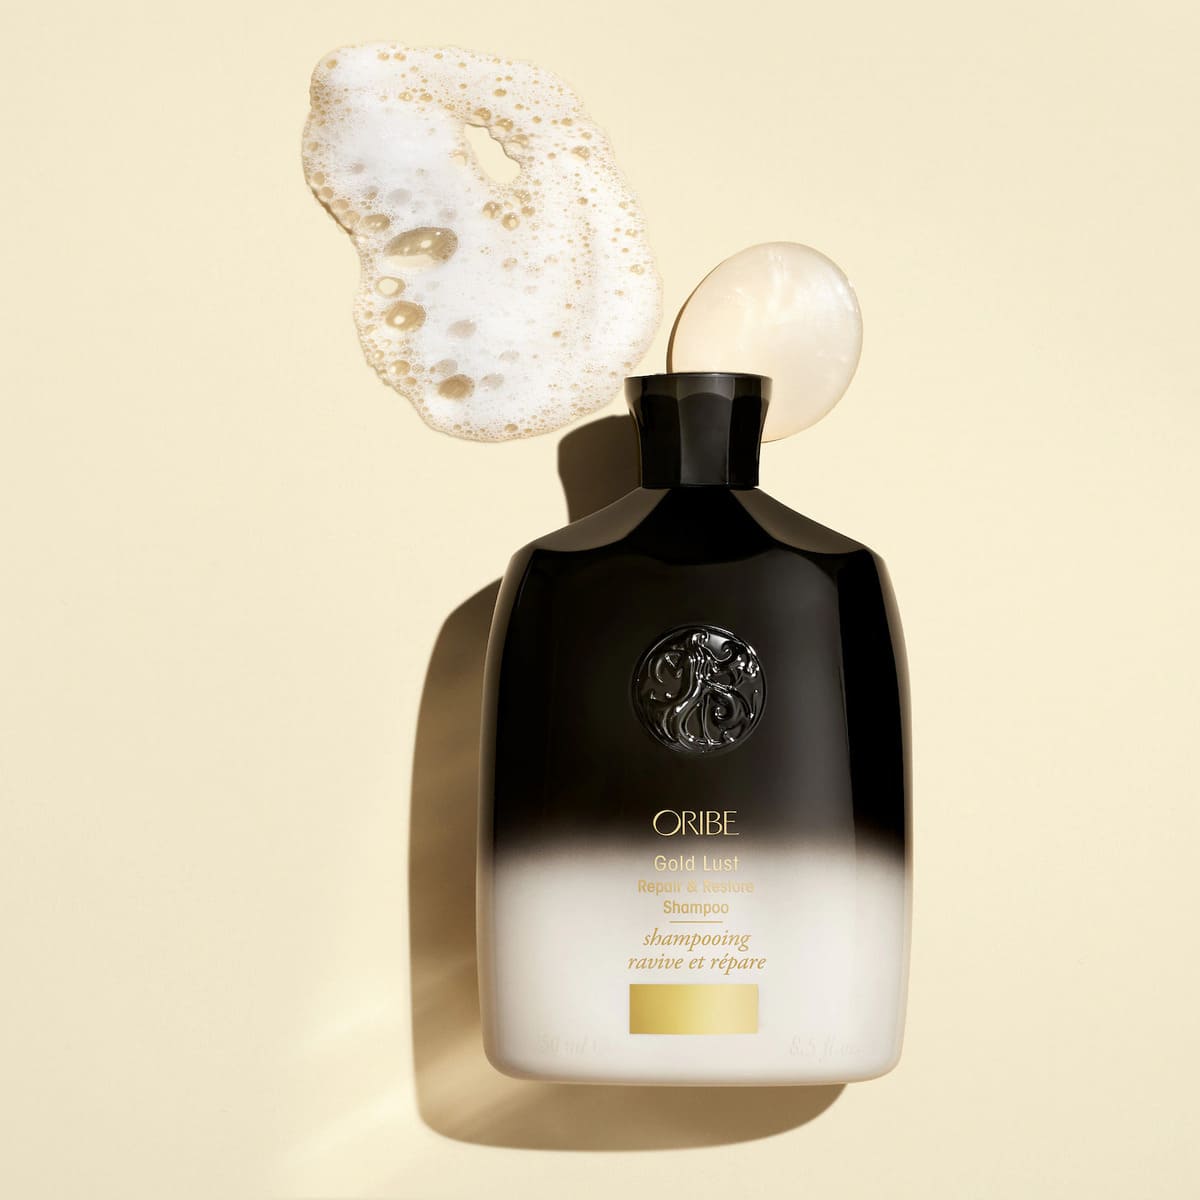 Oribe Gold Lust Repair & Restore Shampoo from Sephora